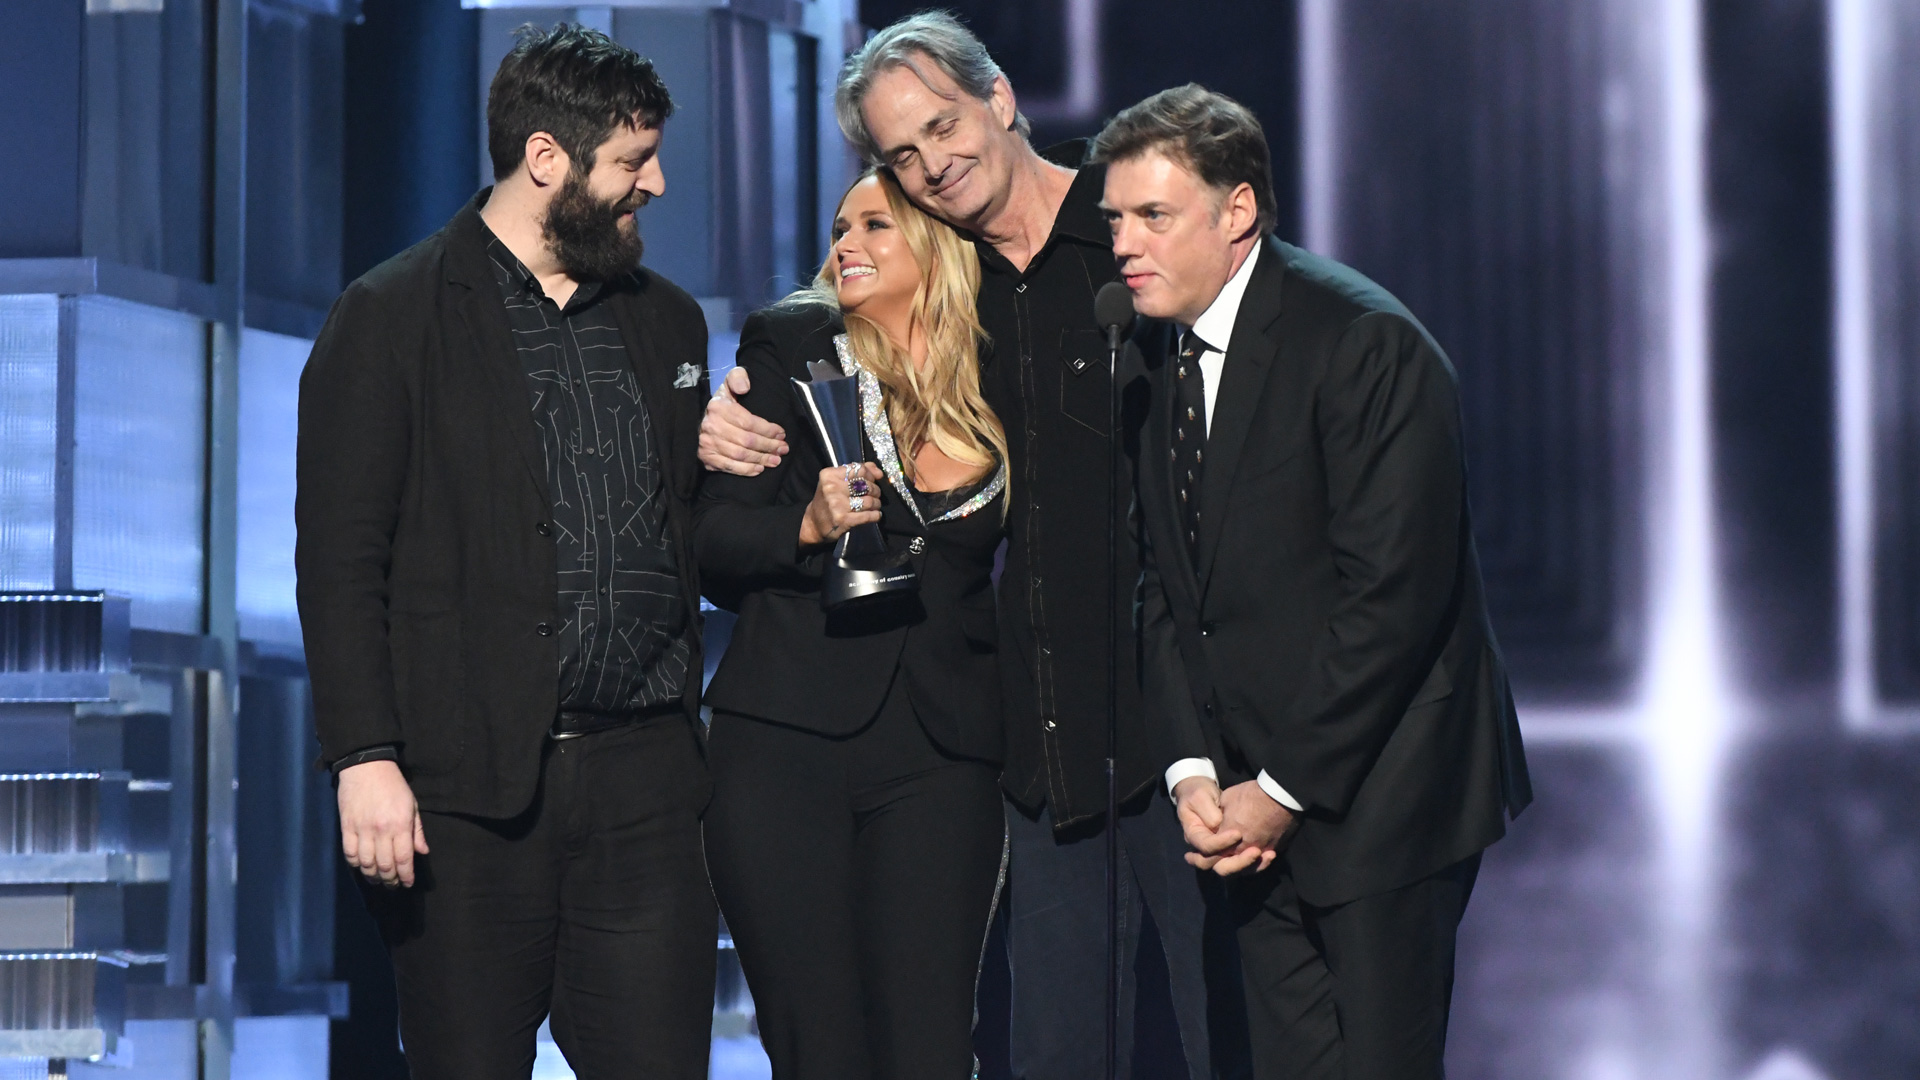 Miranda Lambert wins Album Of The Year at the 52nd ACM Awards